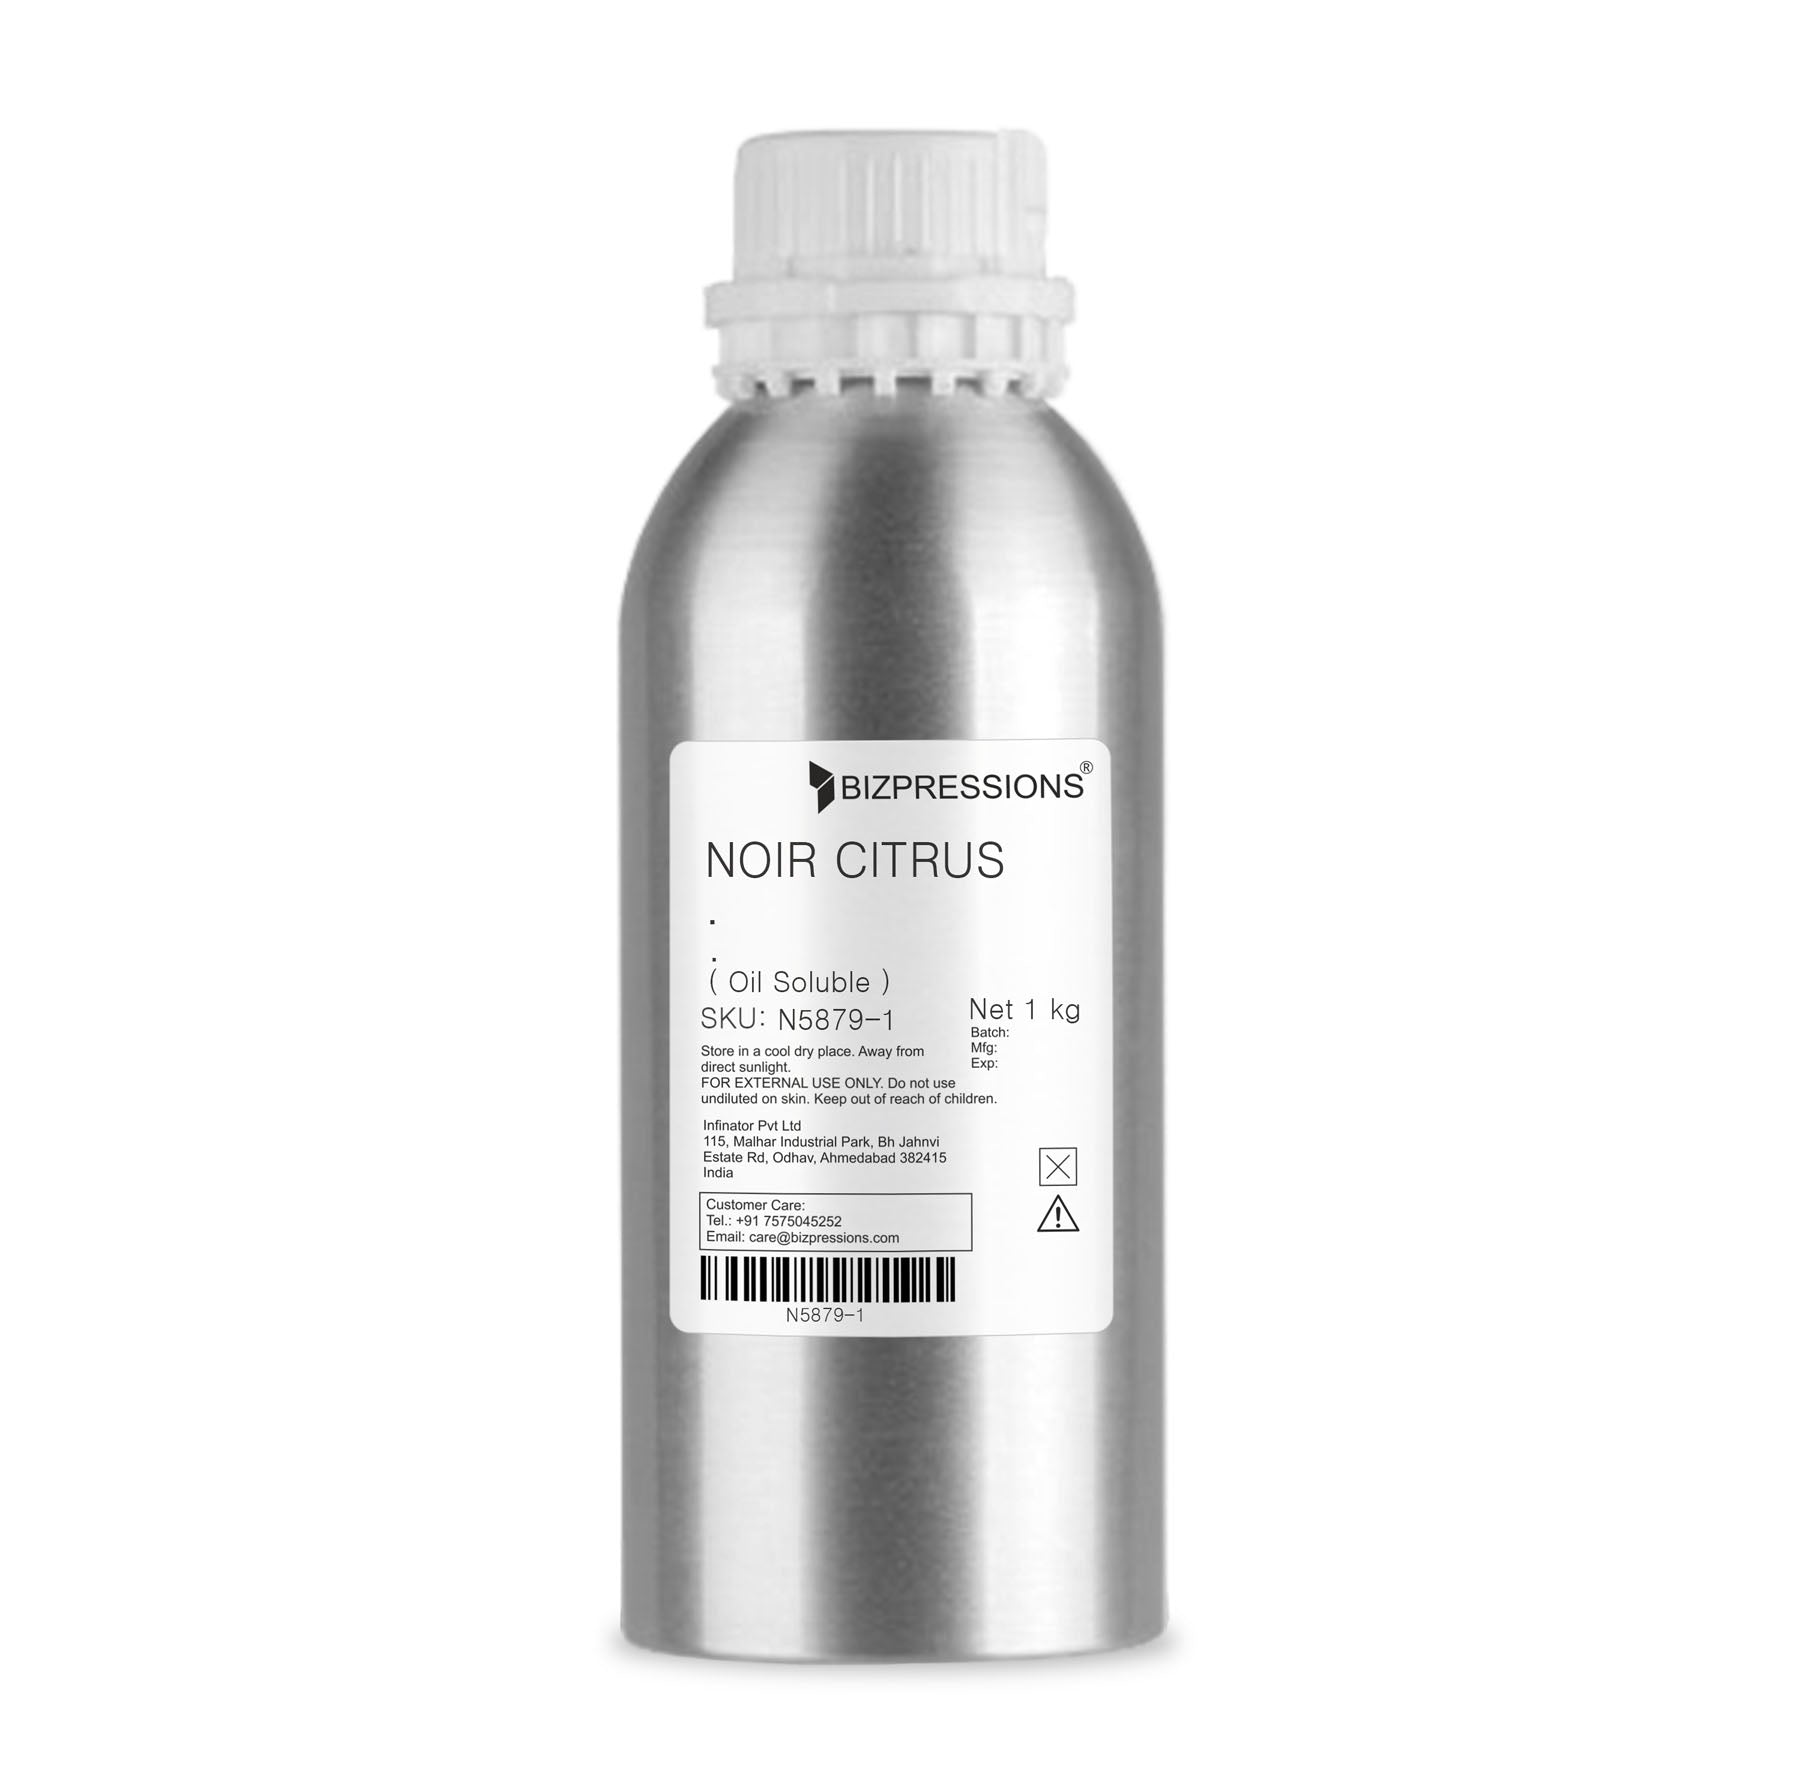 NOIR CITRUS - Fragrance ( Oil Soluble ) - 1 kg